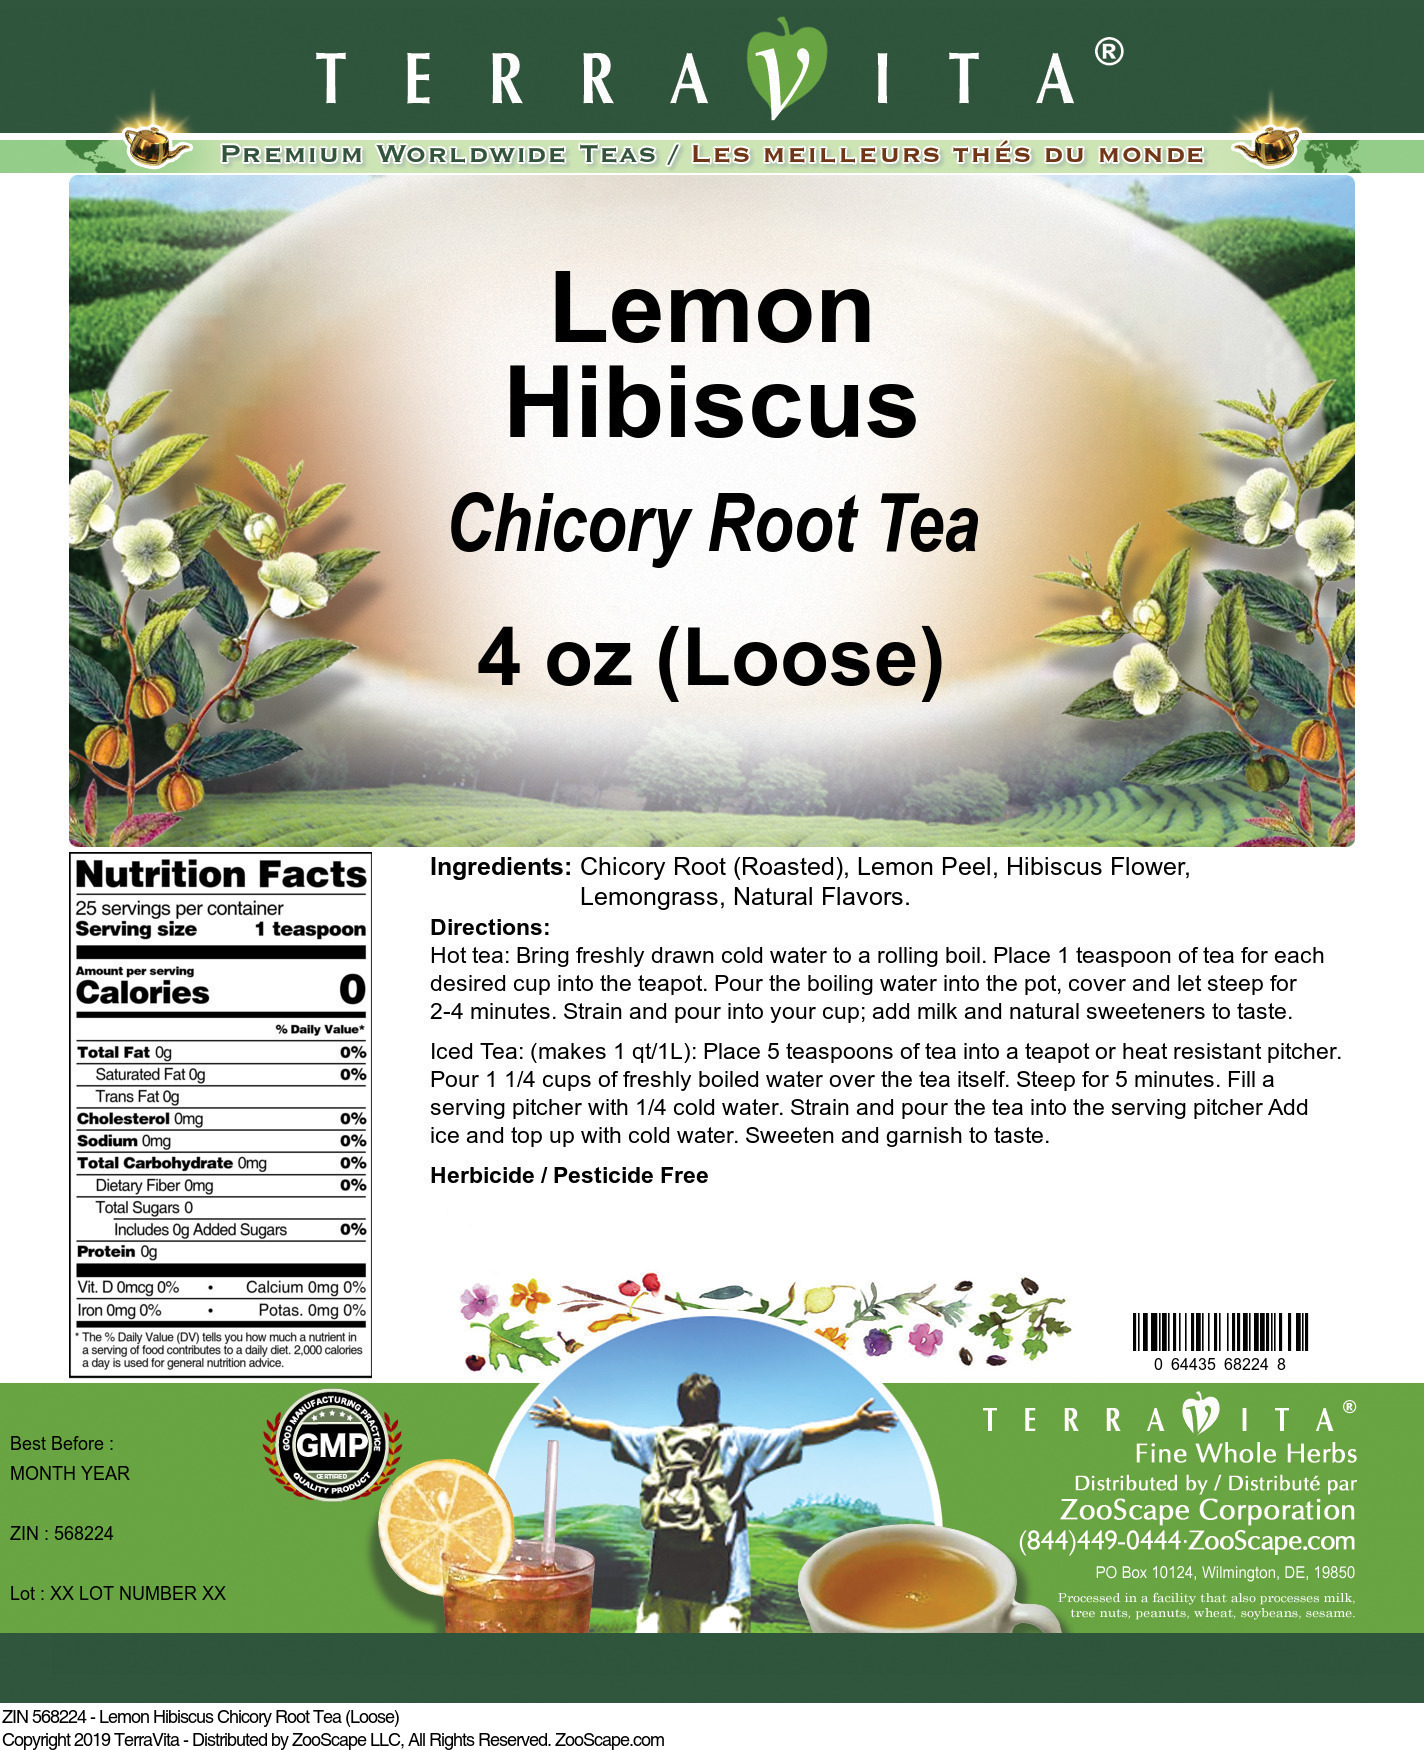 Lemon Hibiscus Chicory Root Tea (Loose) - Label